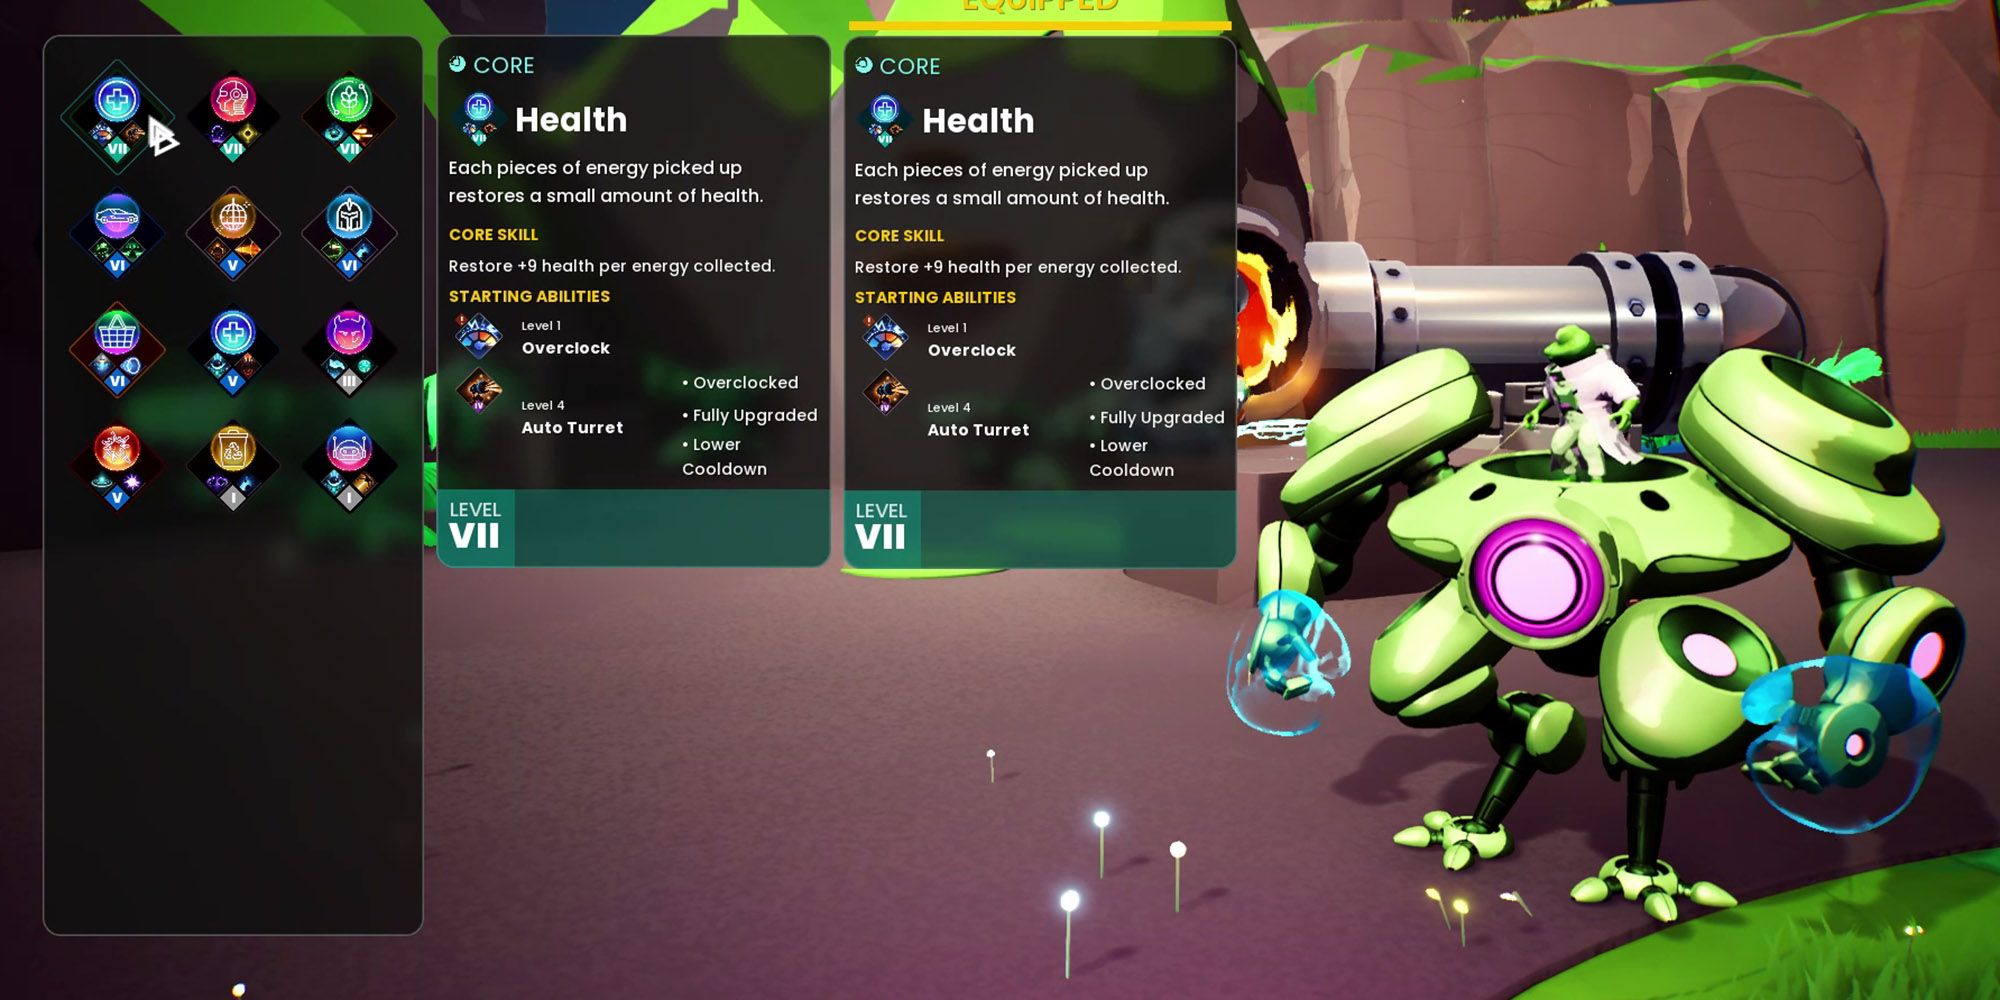 Shoulders Of Giants - Health GERM Core Description In-Game